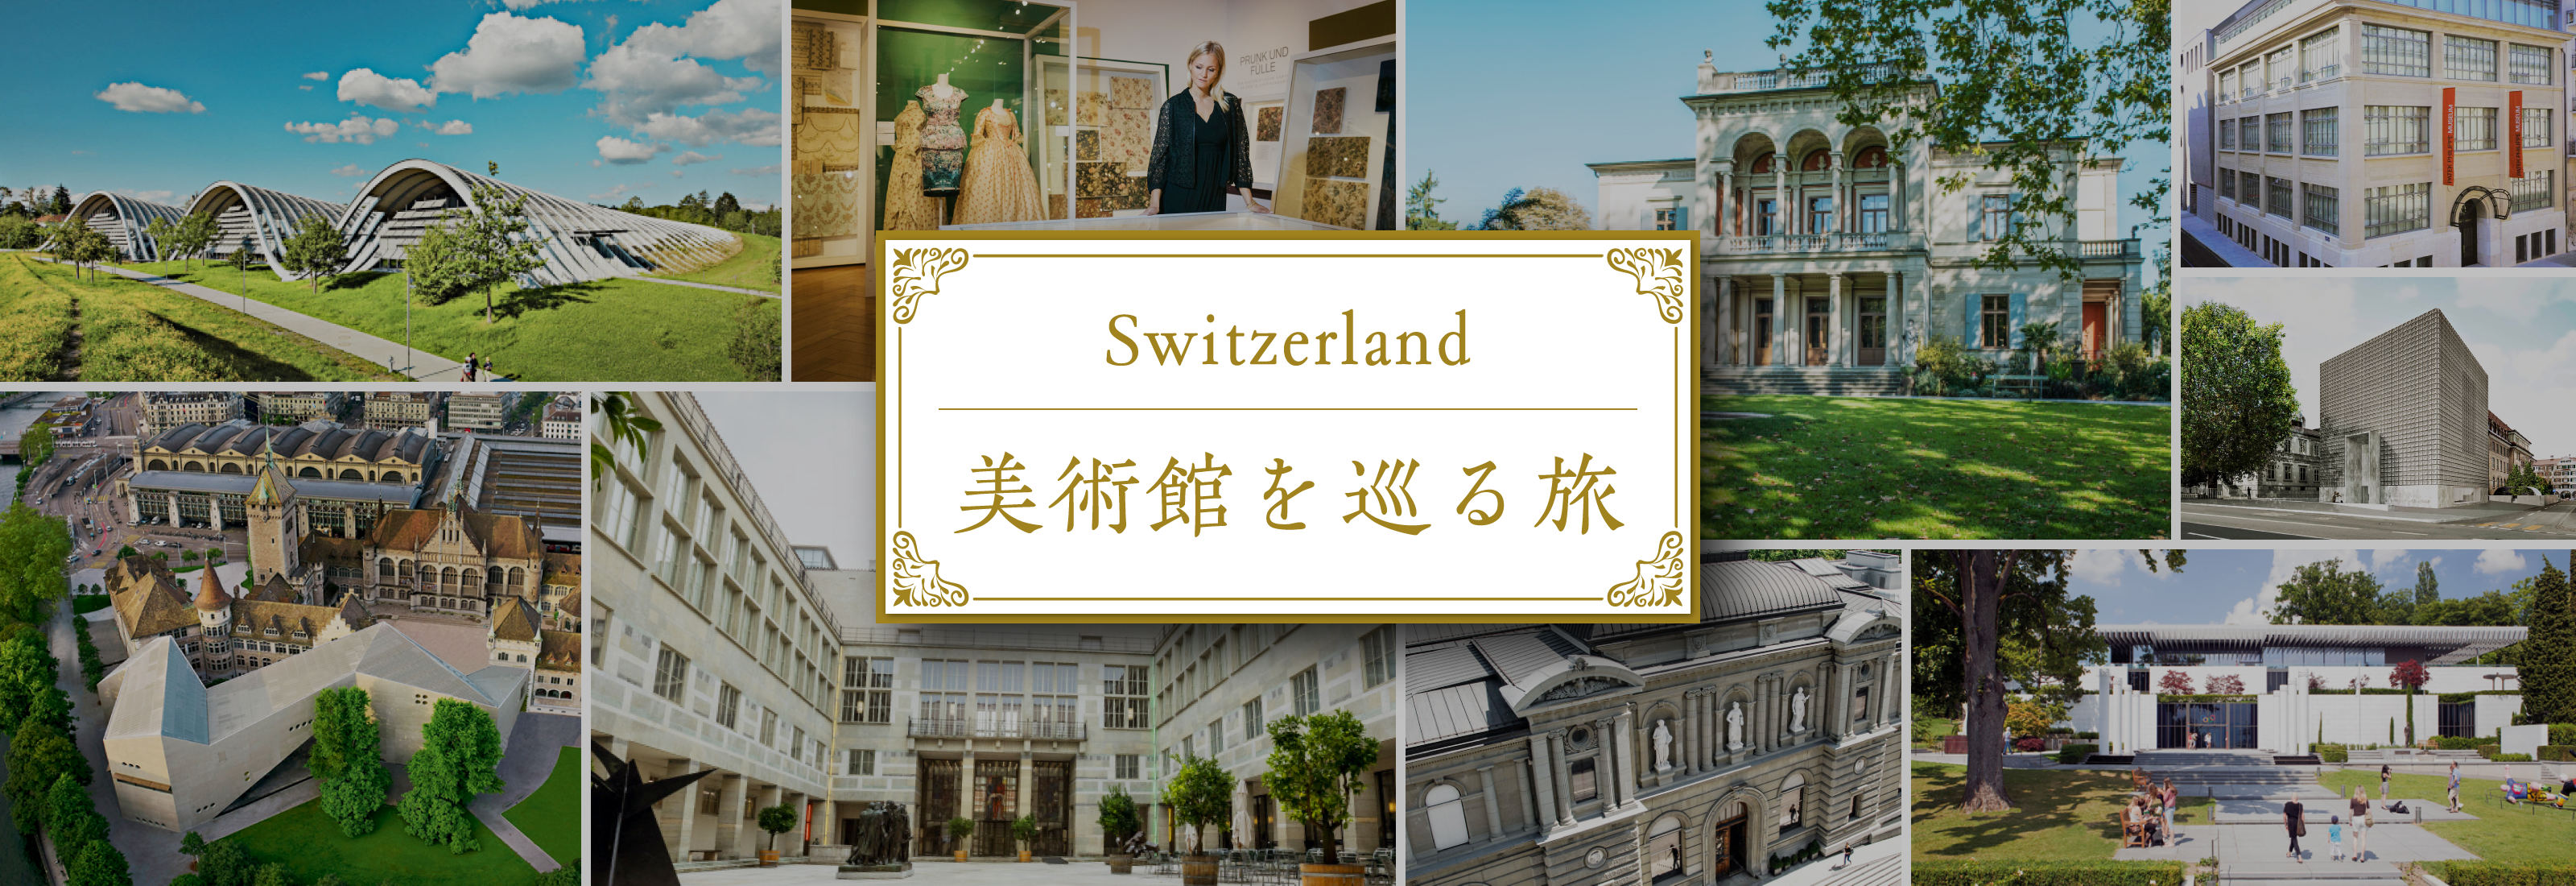 Switzerland 美術館を巡る旅